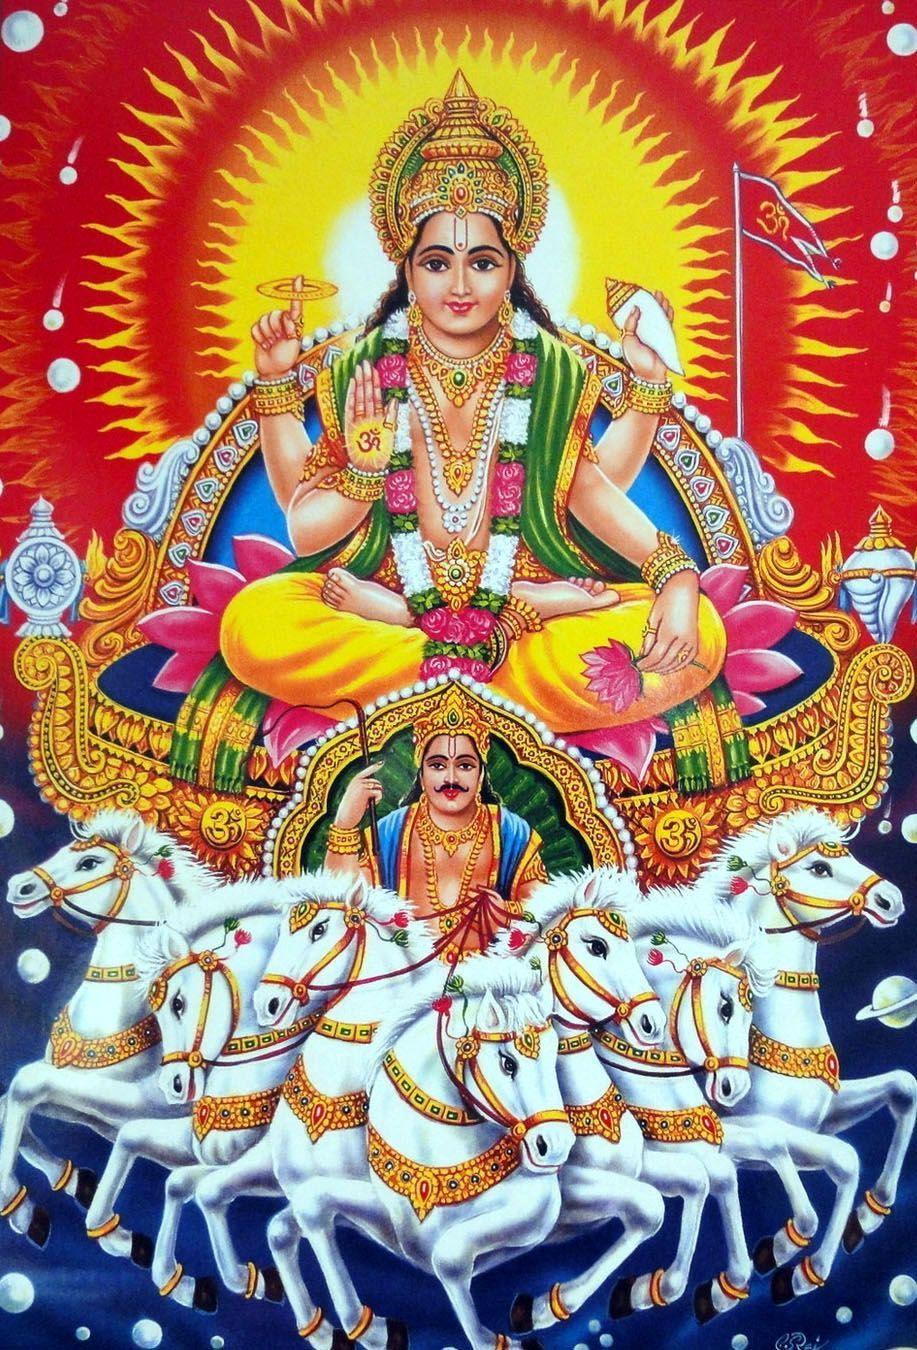 Surya Dev. Surya Dev Image. Wallpaper downloads